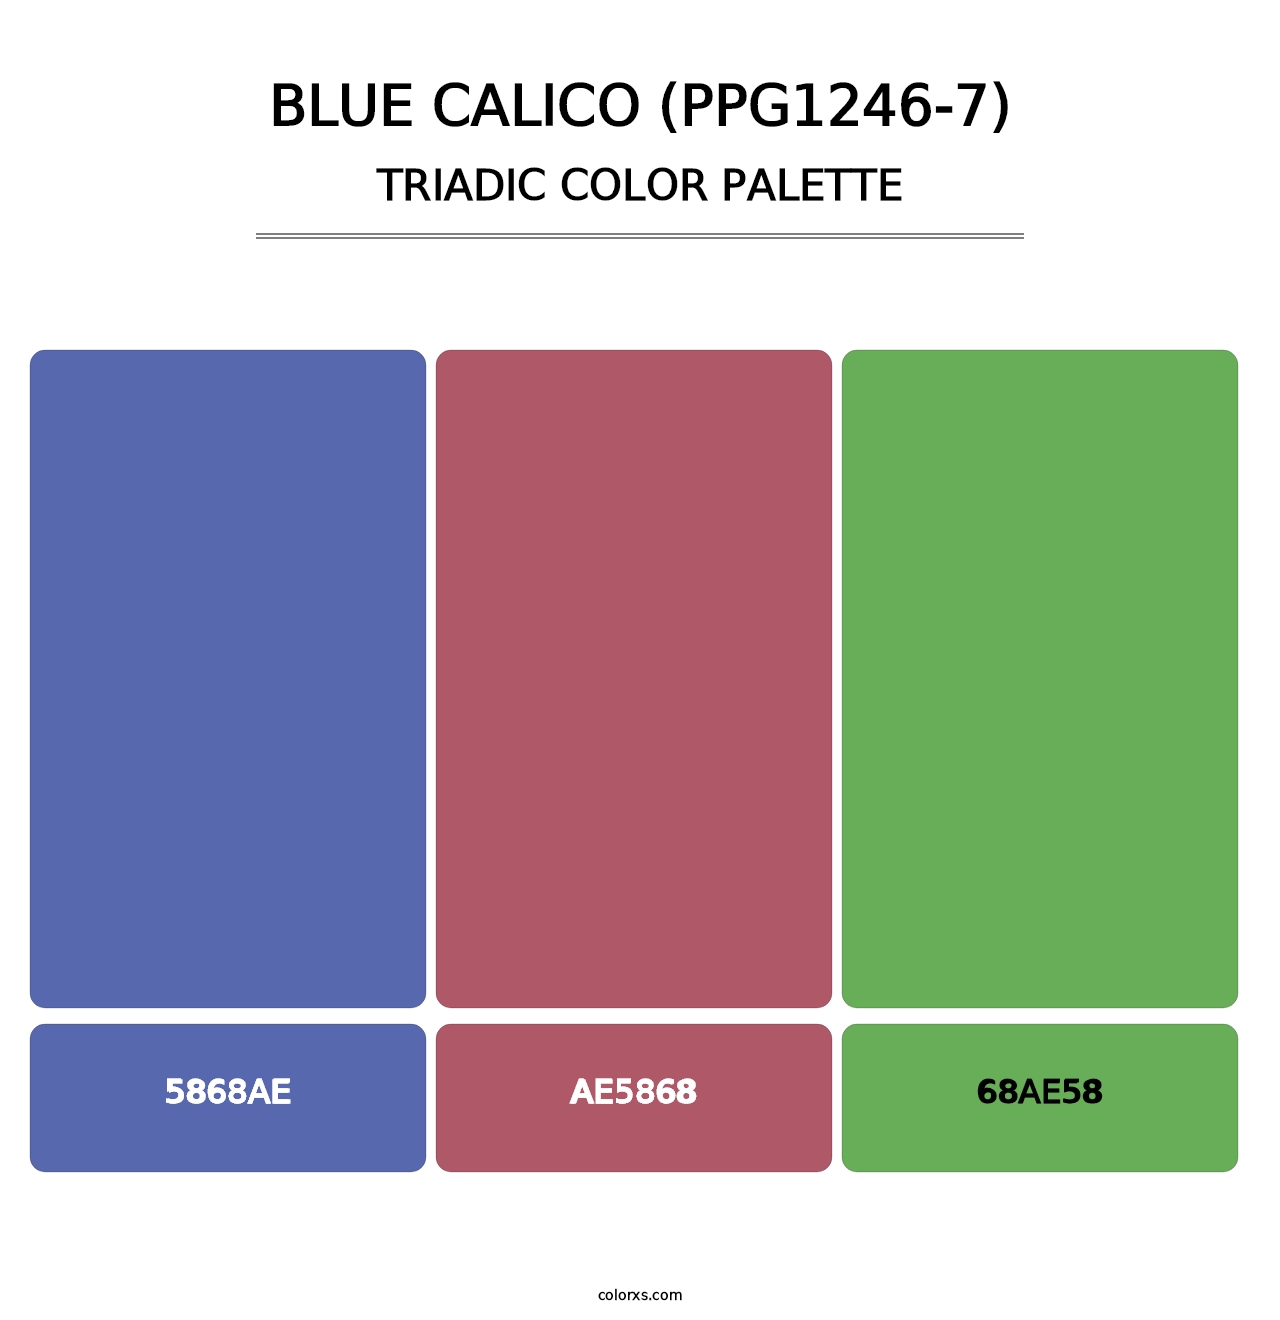 Blue Calico (PPG1246-7) - Triadic Color Palette